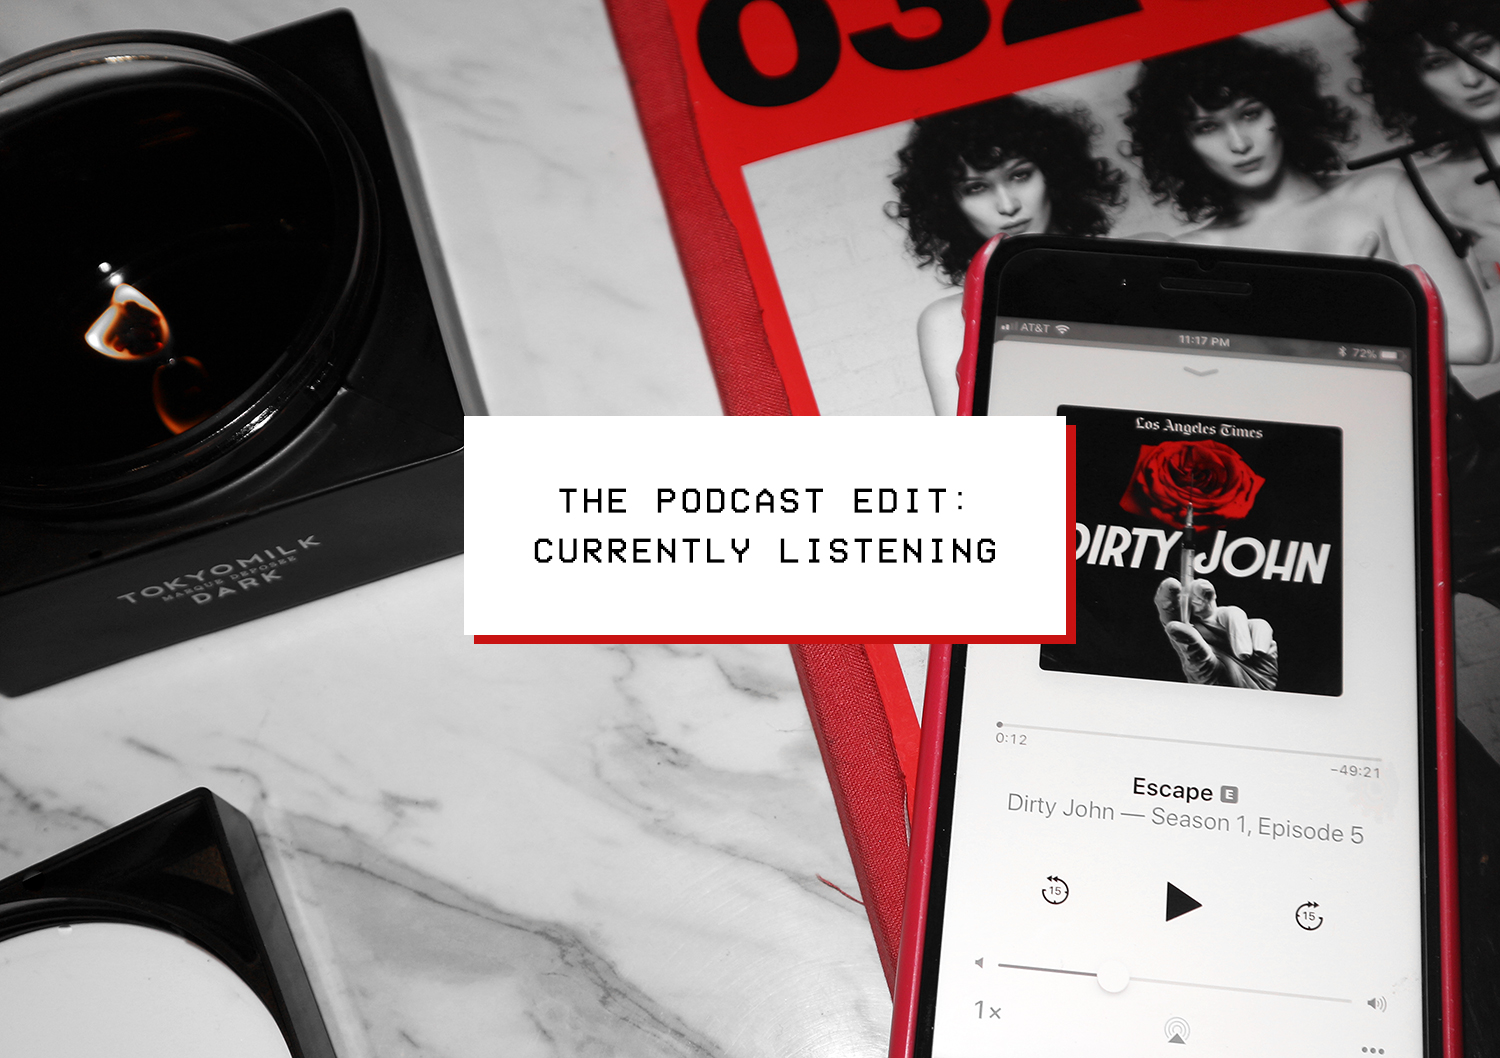 fashionlush, binge worthy true crime podcasts